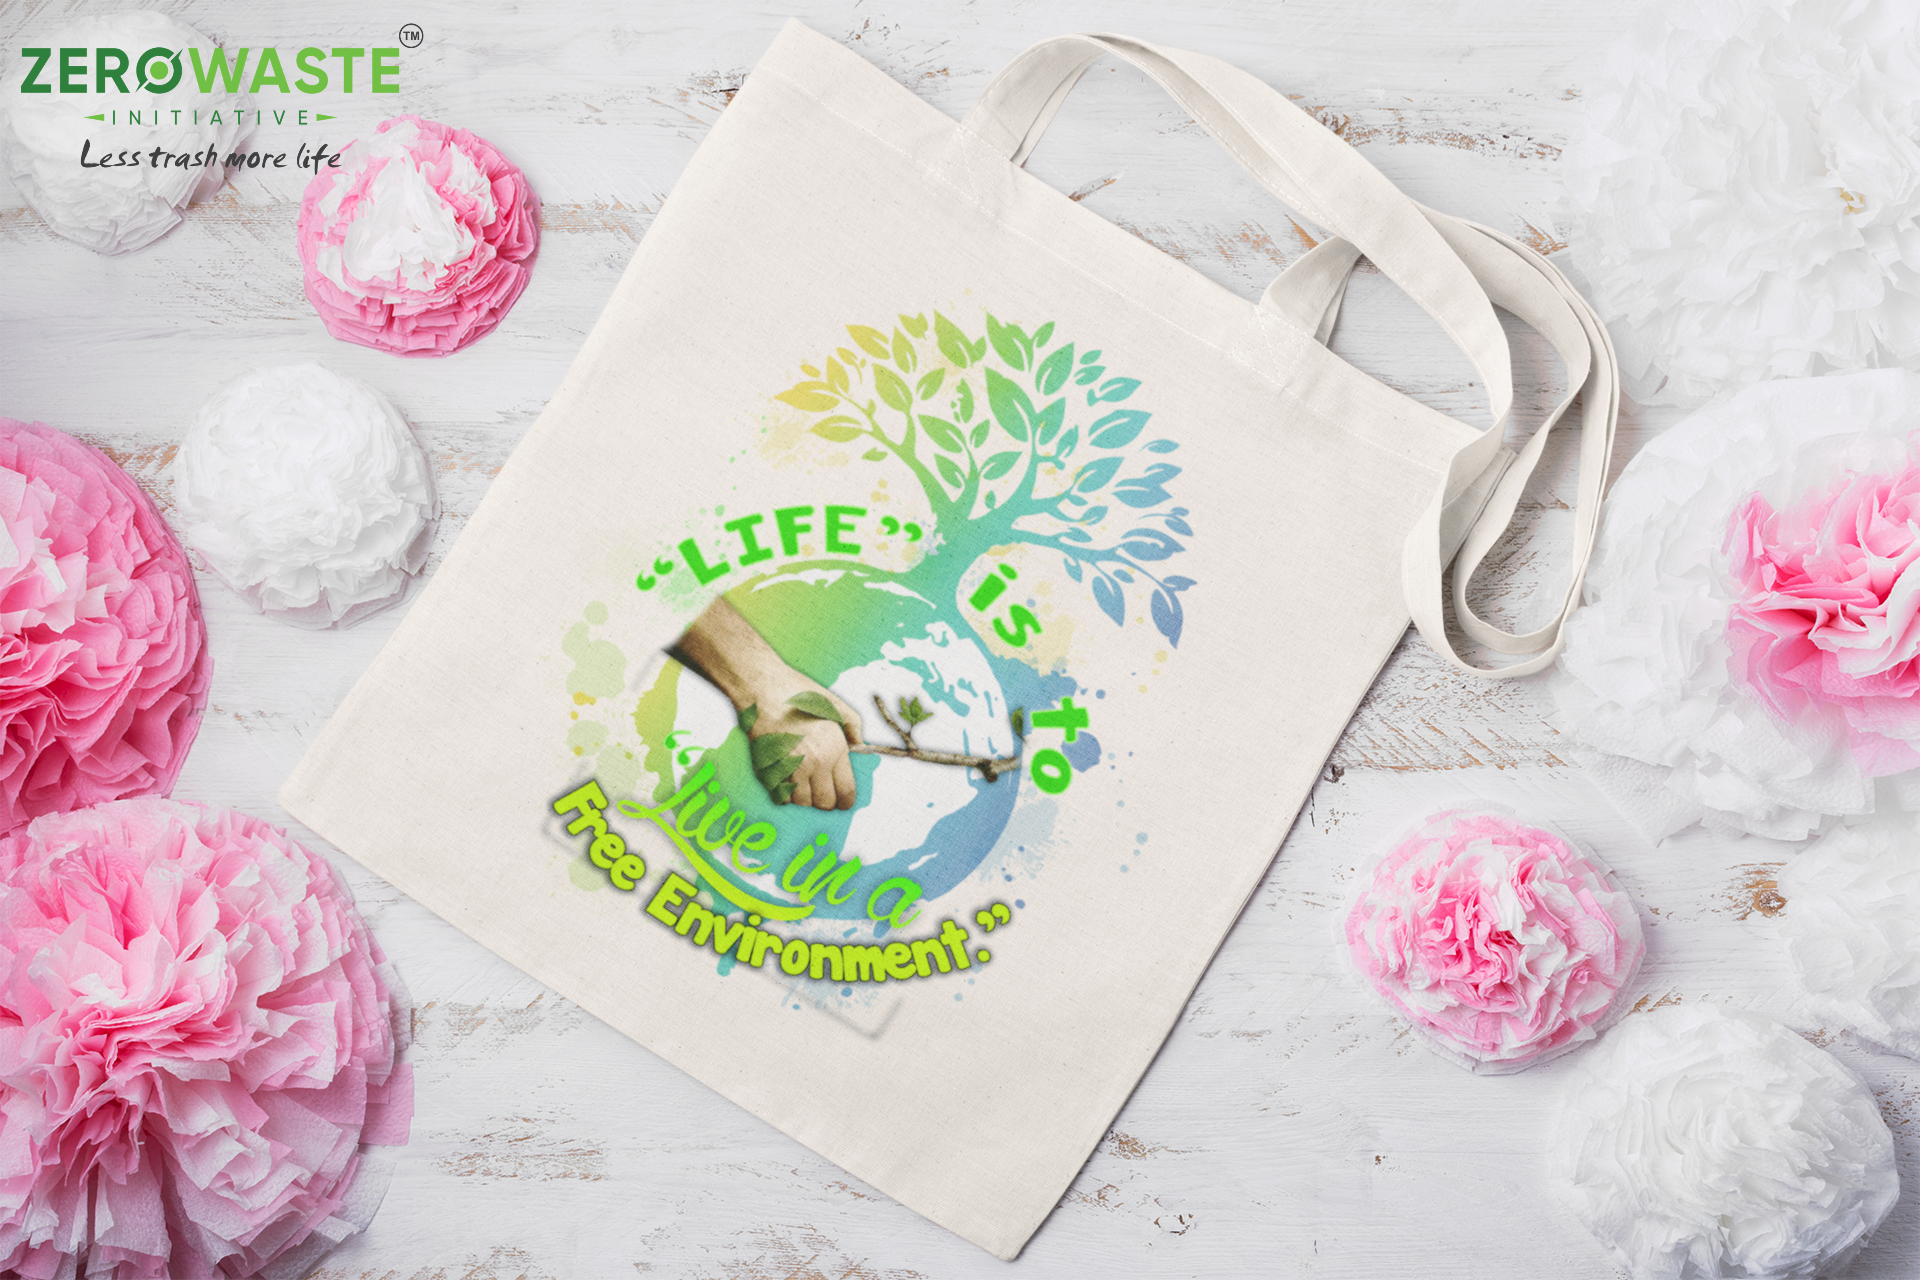 free-environment-canvas-tote-bag-zero-waste